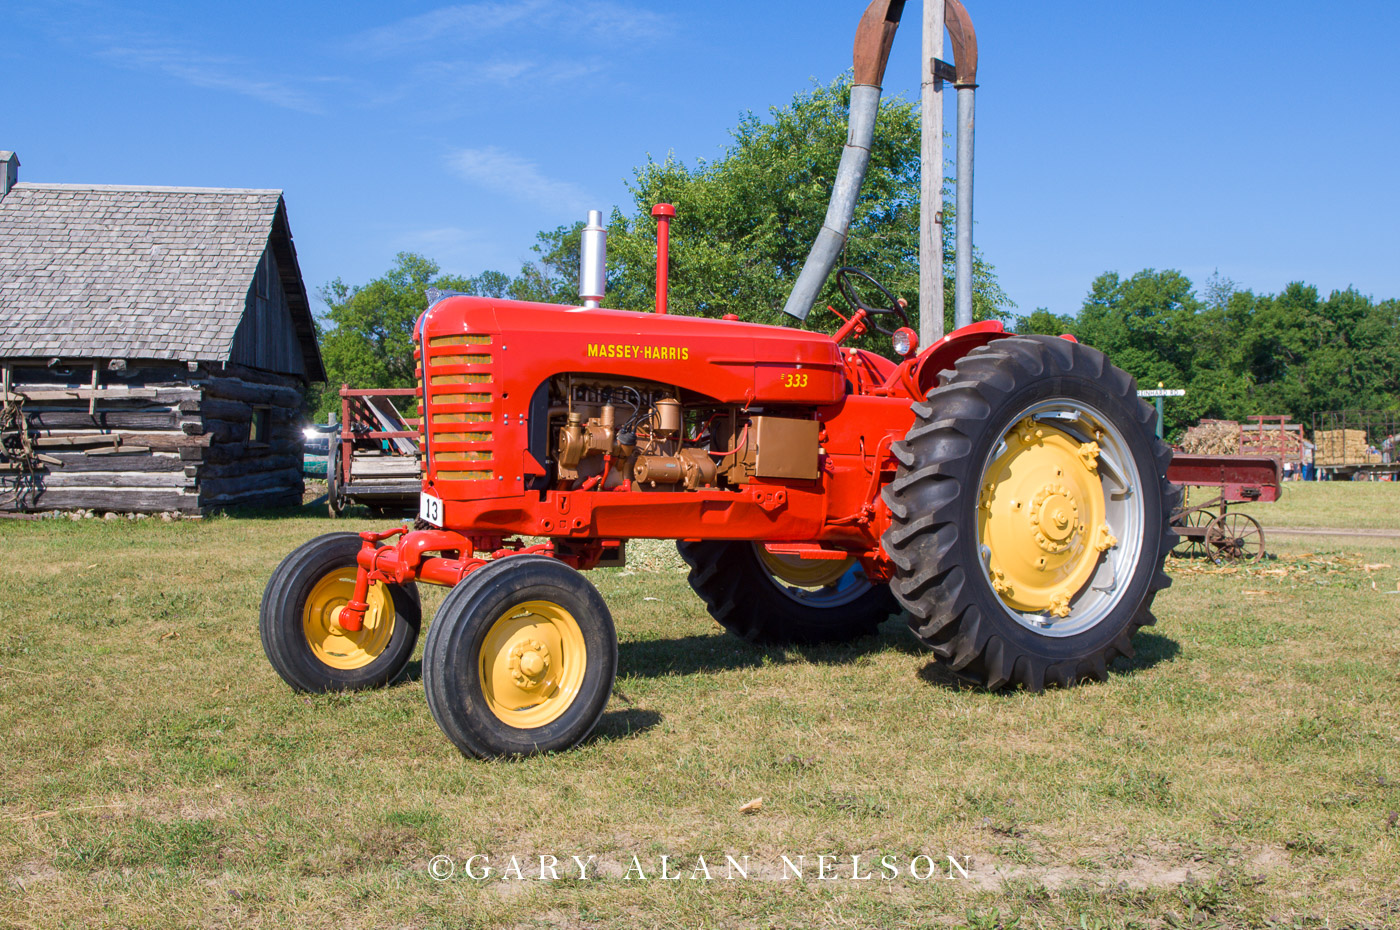 1956 Massey-Harris rwo crop Model 333